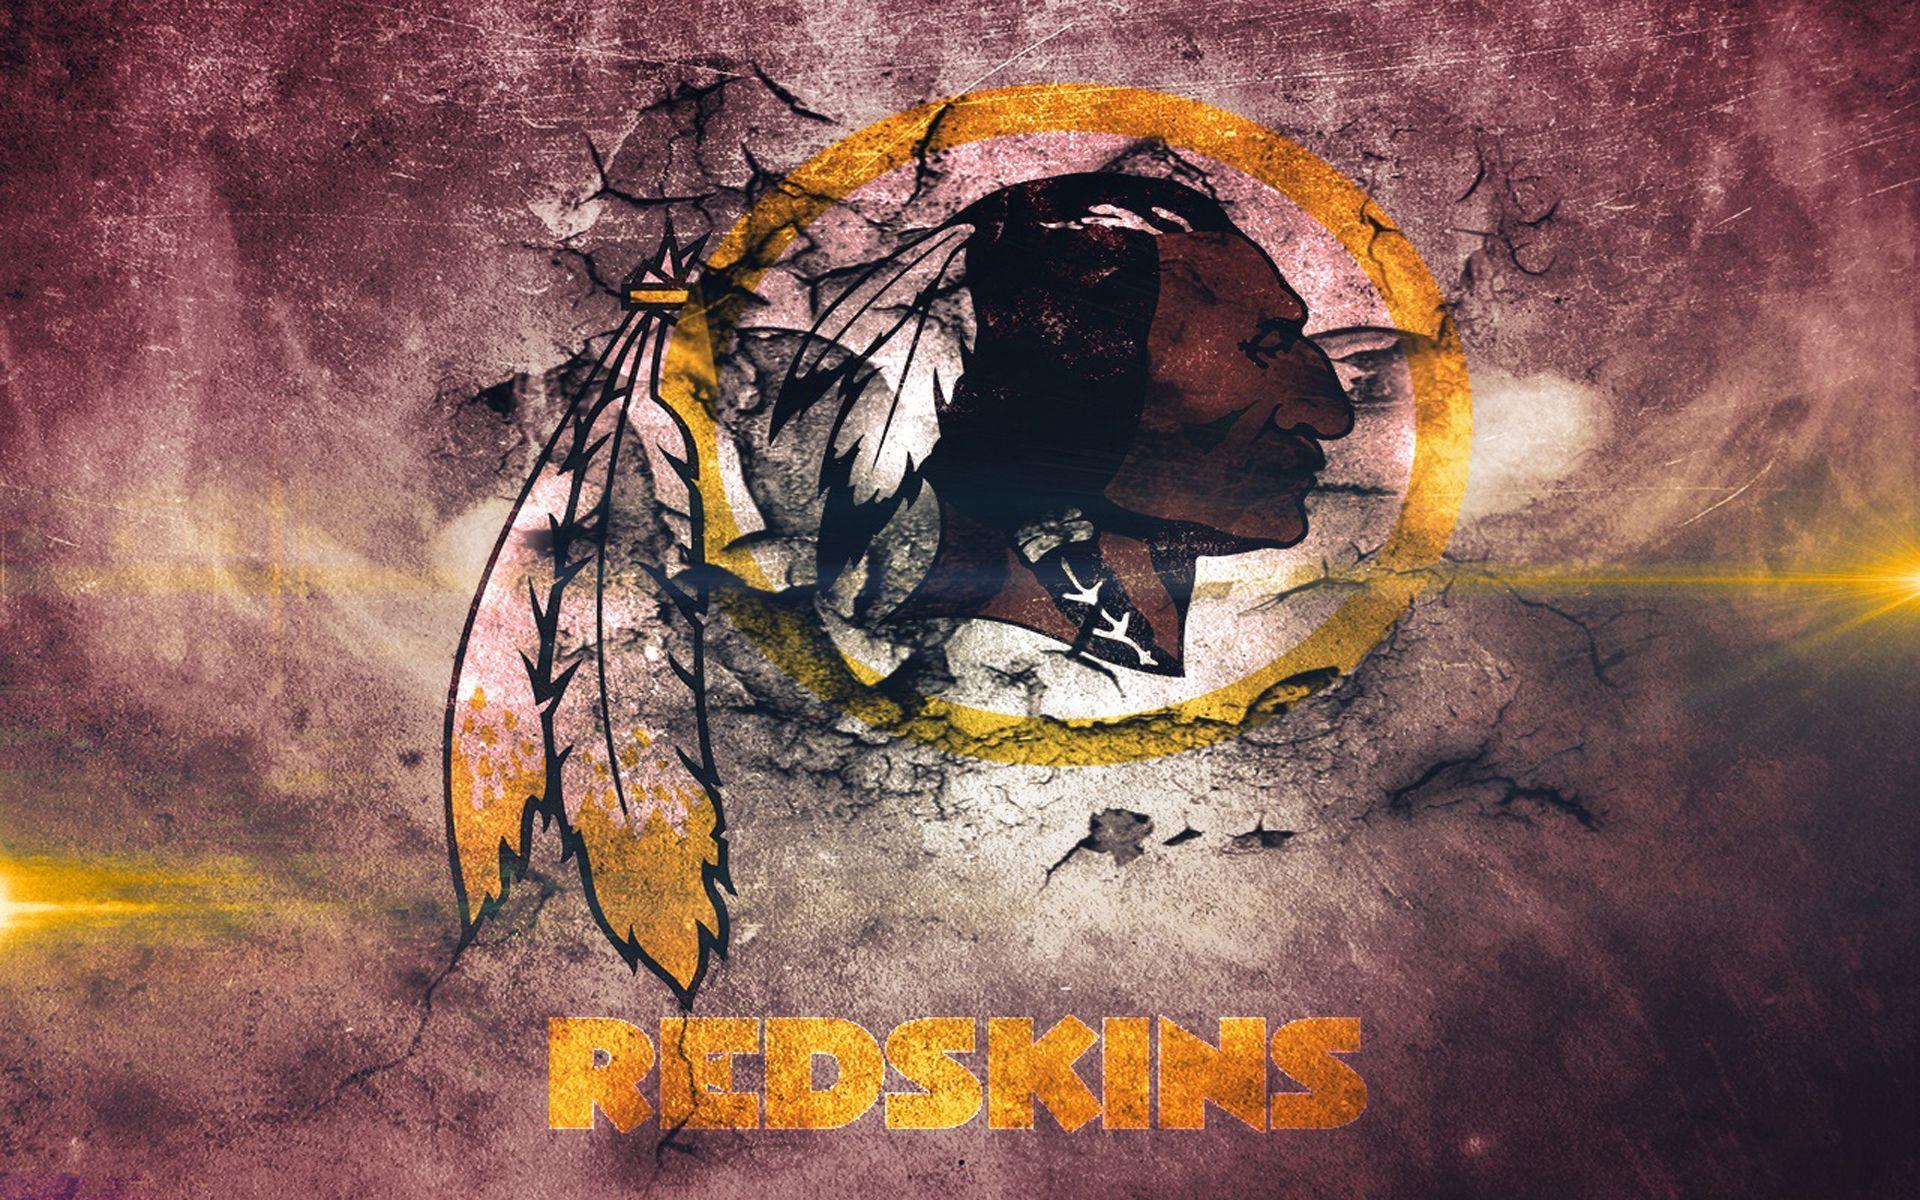 Redskins Background. Wallpaper, Background, Image, Art Photo